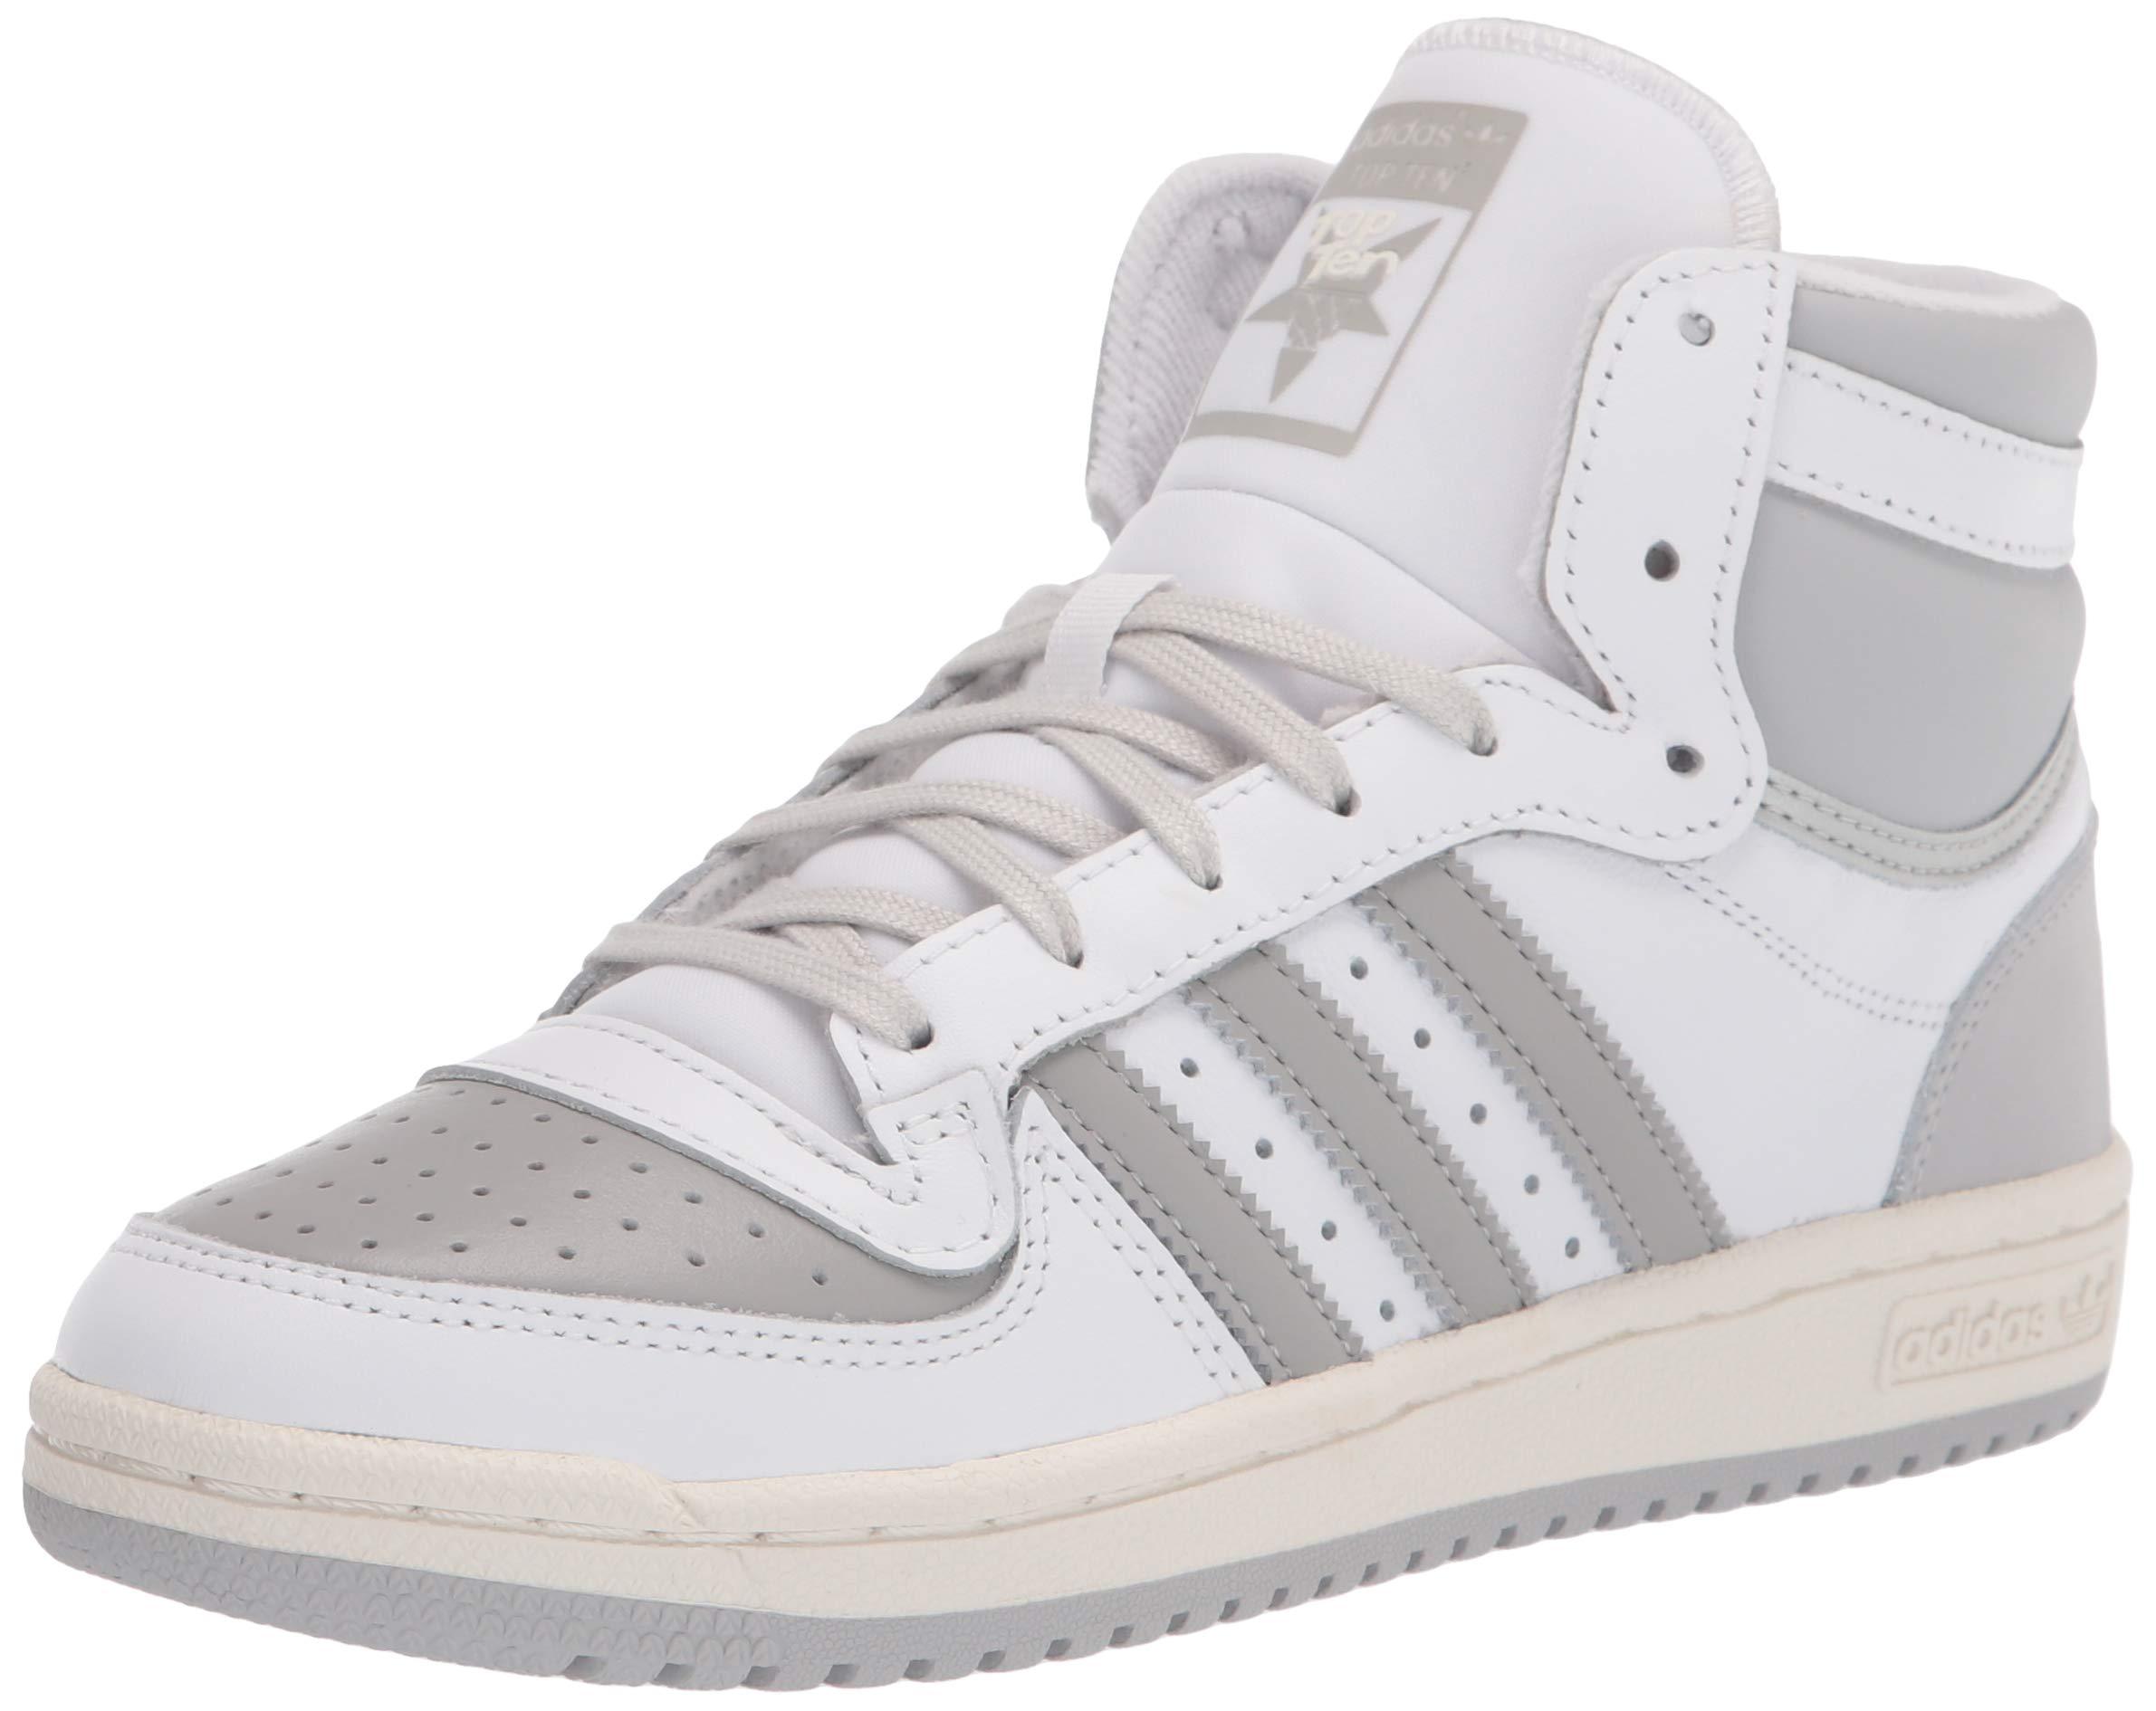 adidas Originals S Top Ten Rb Sneaker in White for Men - Save 49% - Lyst